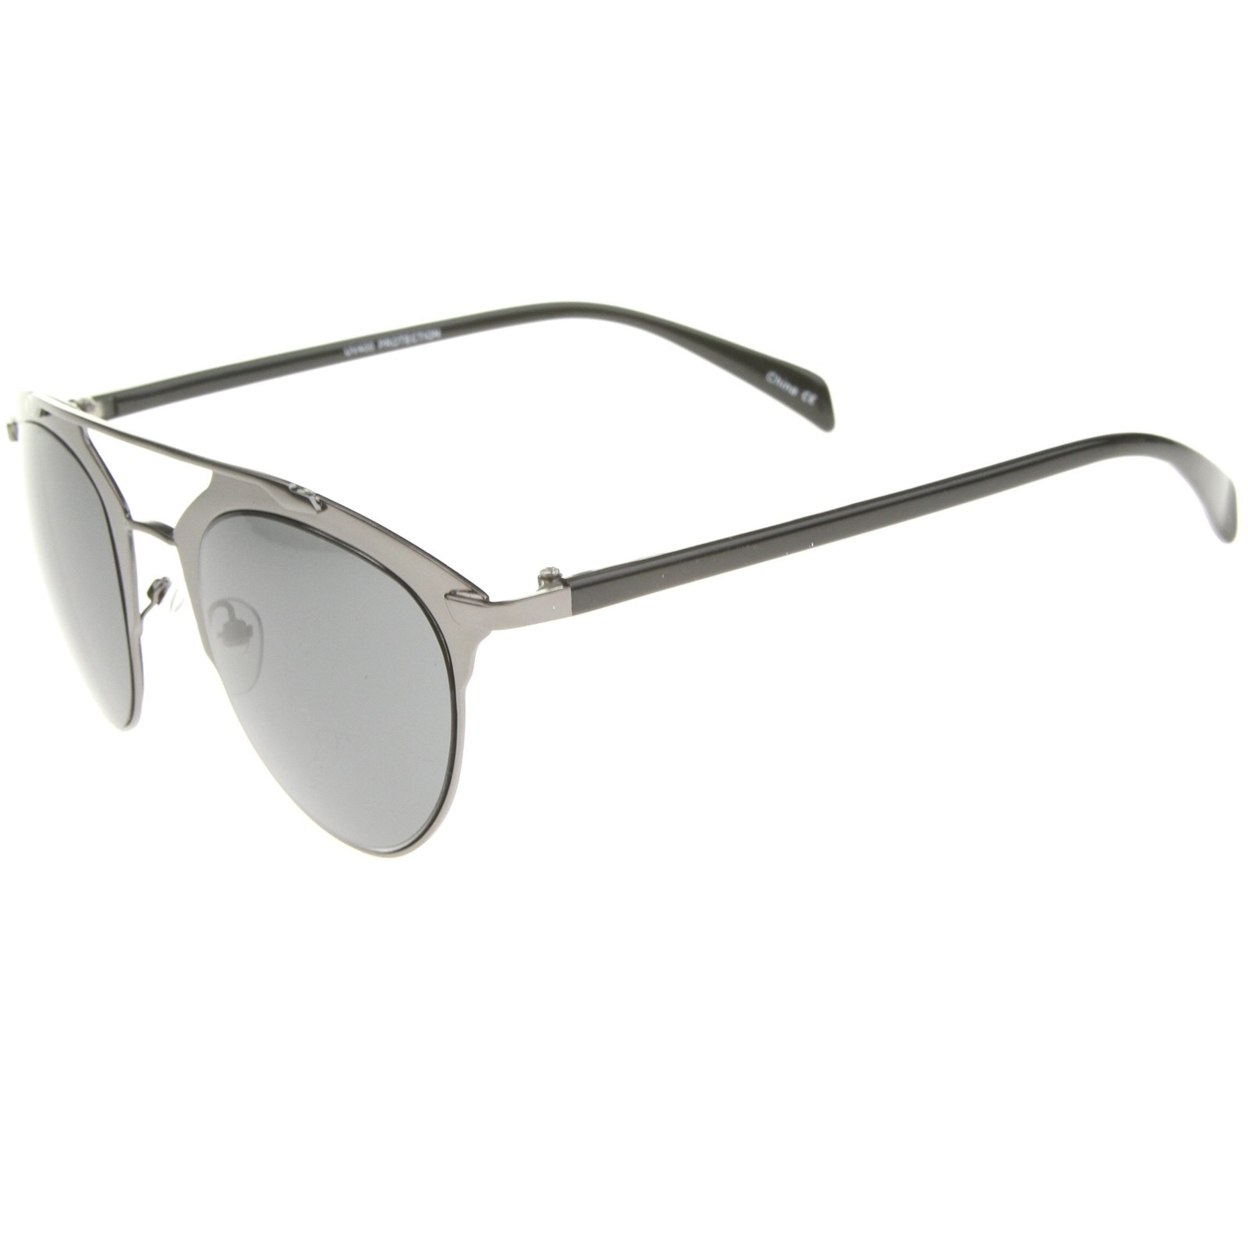 Modern Fashion Metallic Frame Double Bridge Pantos Aviator Sunglasses 50mm - Gold / Amber